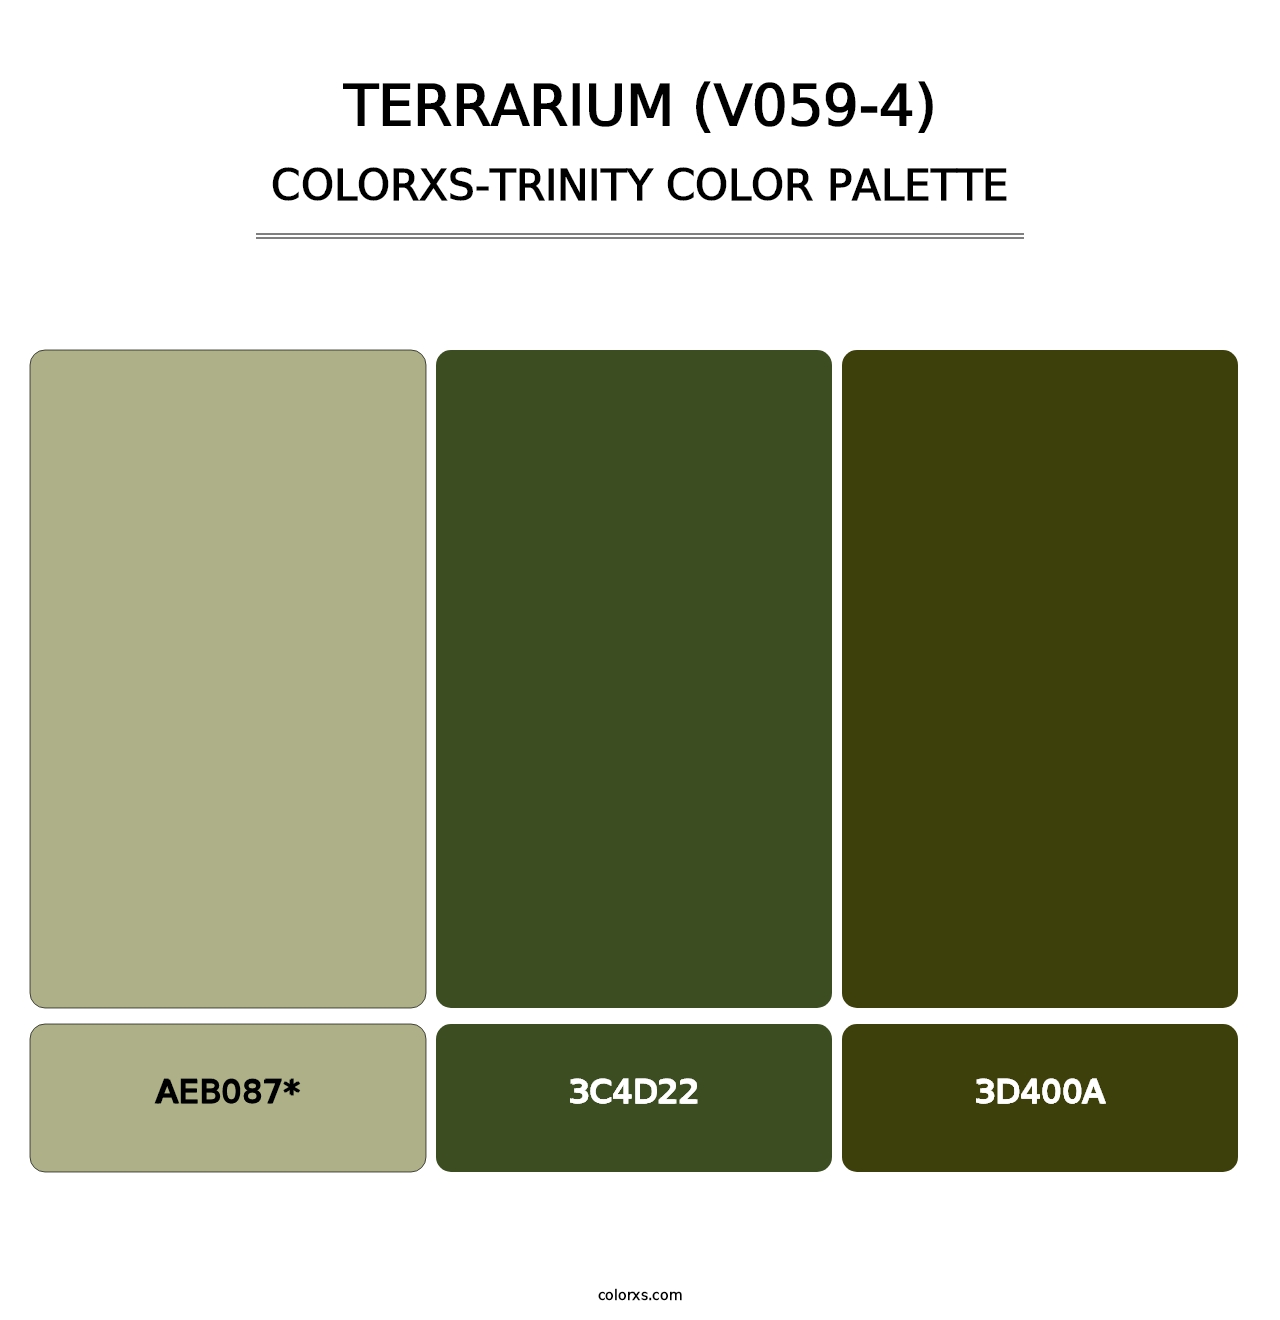 Terrarium (V059-4) - Colorxs Trinity Palette